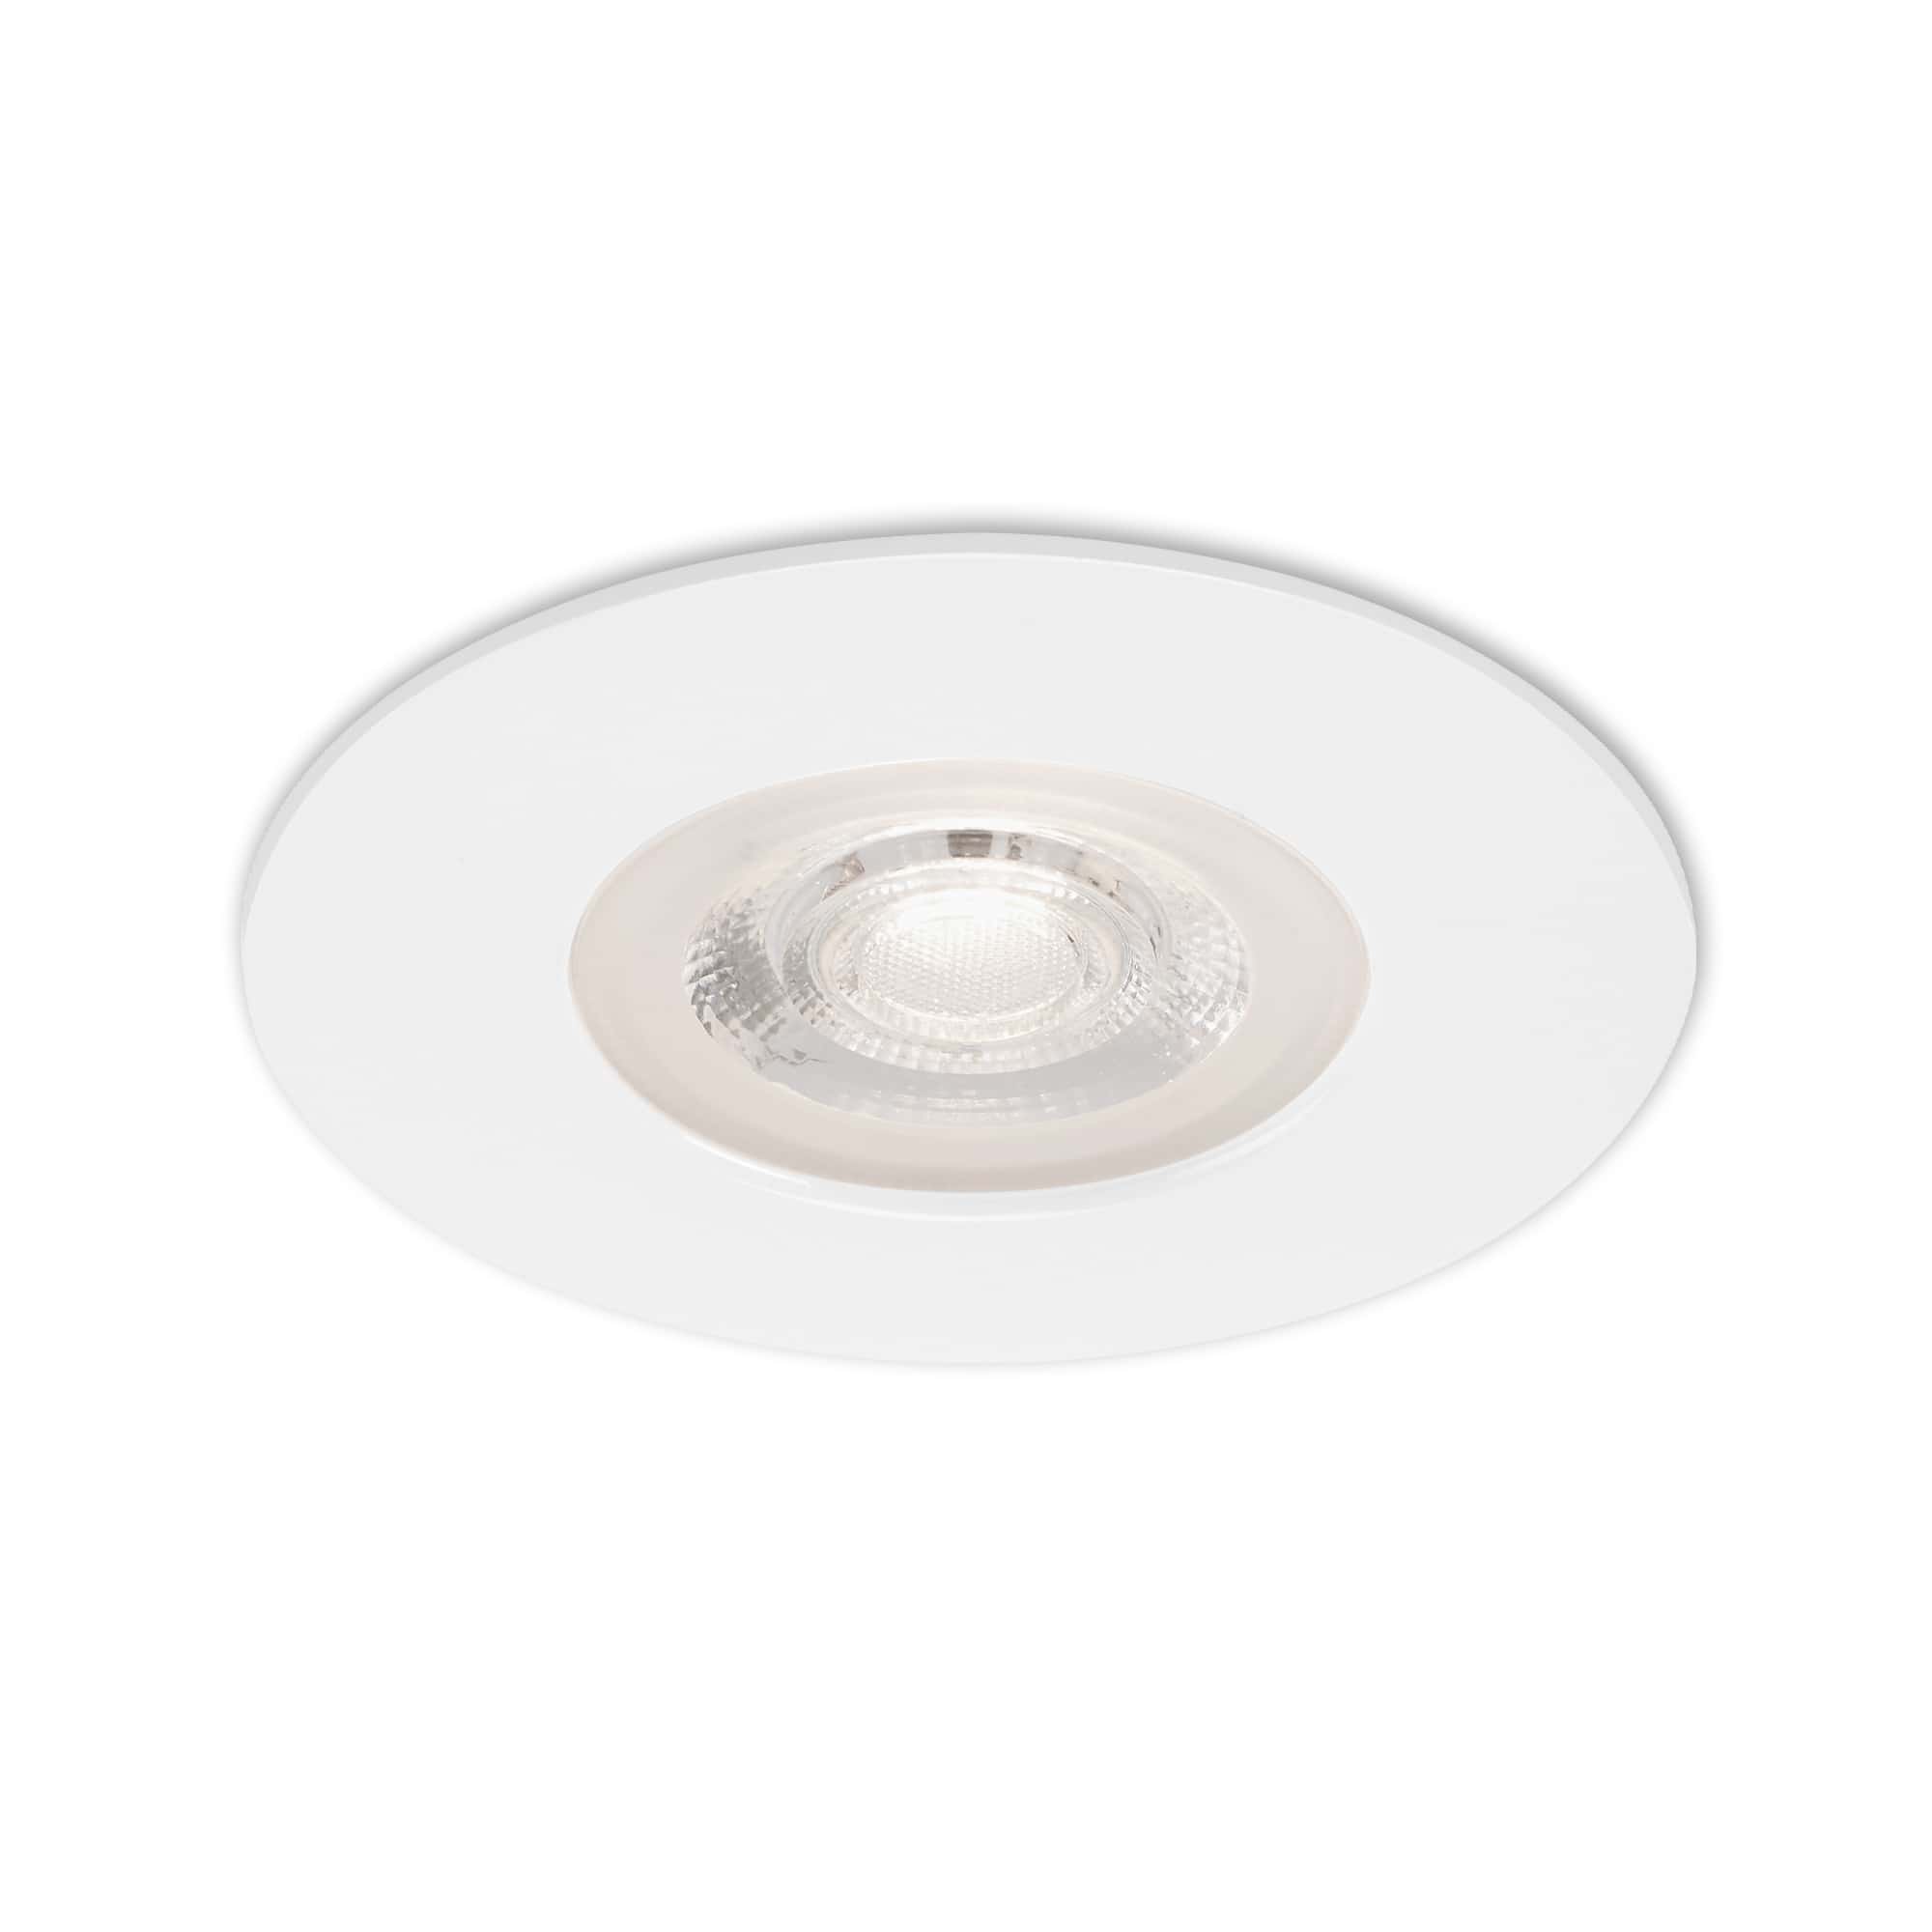 LED Recessed luminaire Ø 9 cm 5W 460lm white